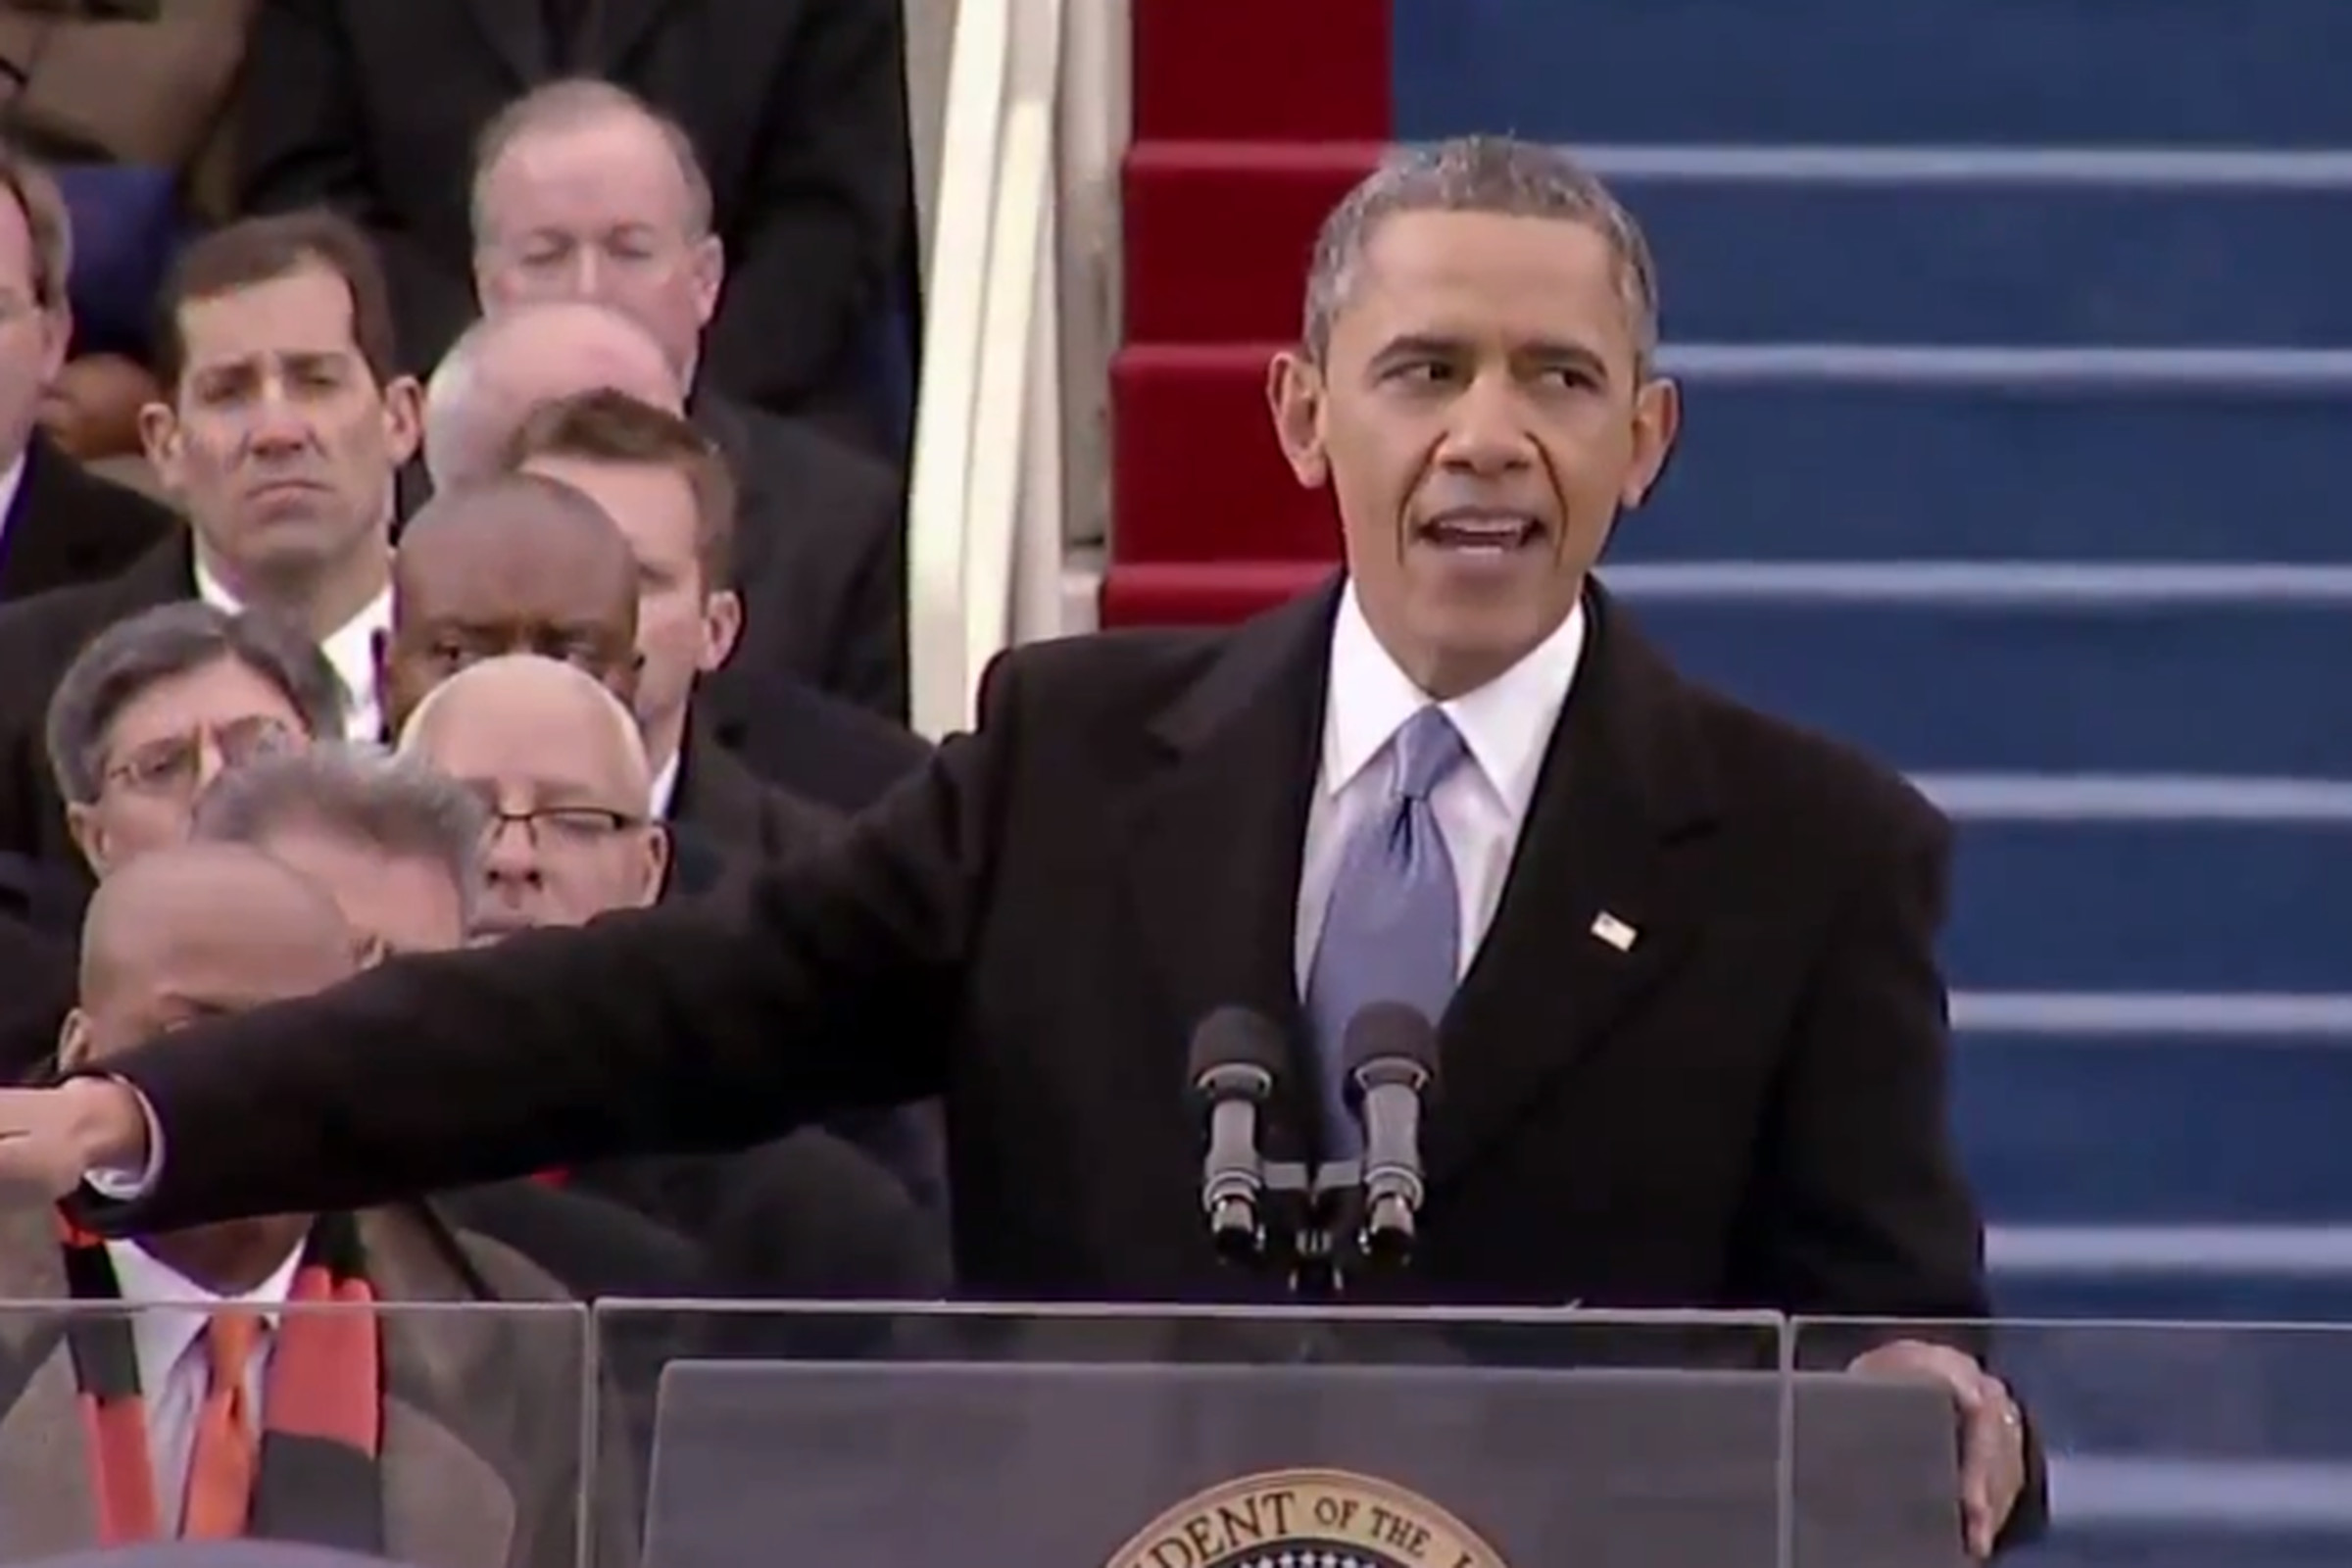 President Obama inaugural address